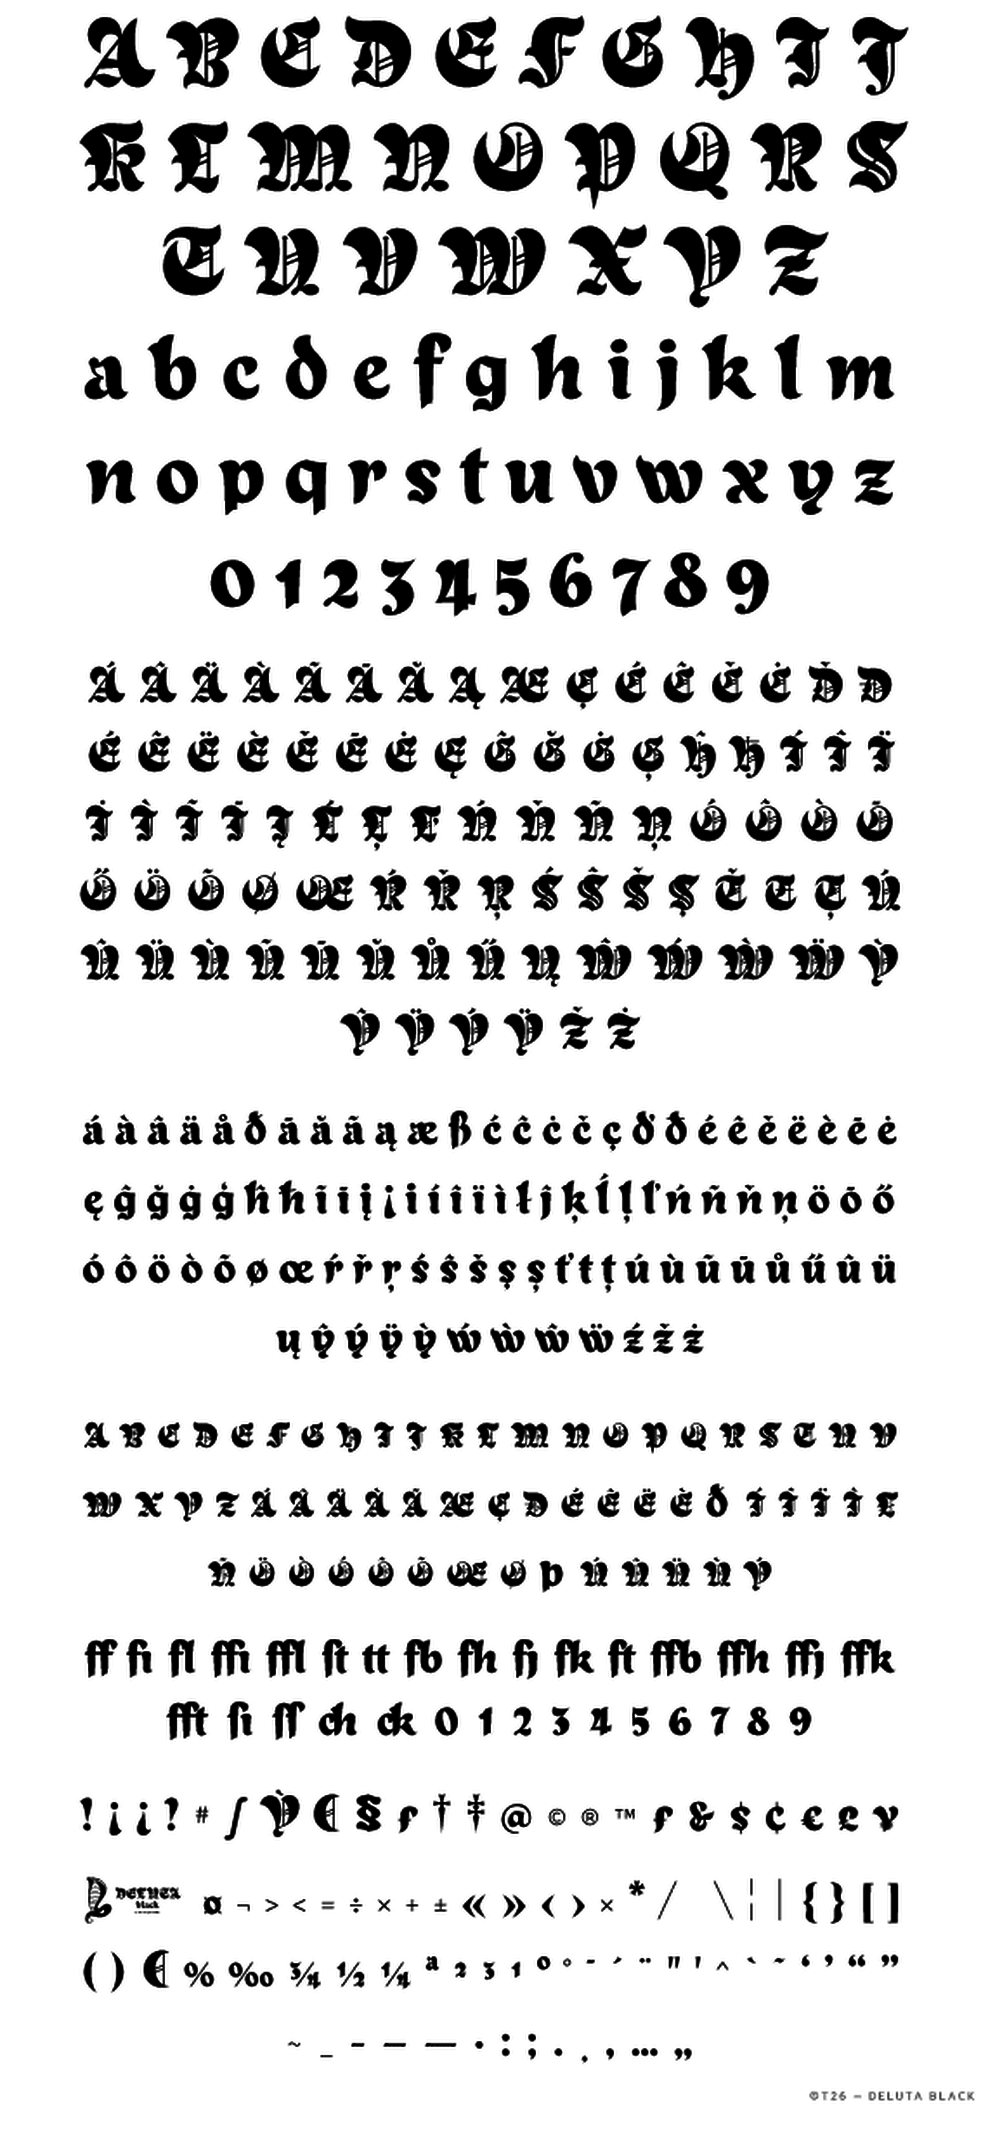 T 26 Digital Type Foundry Fonts Deluta Black